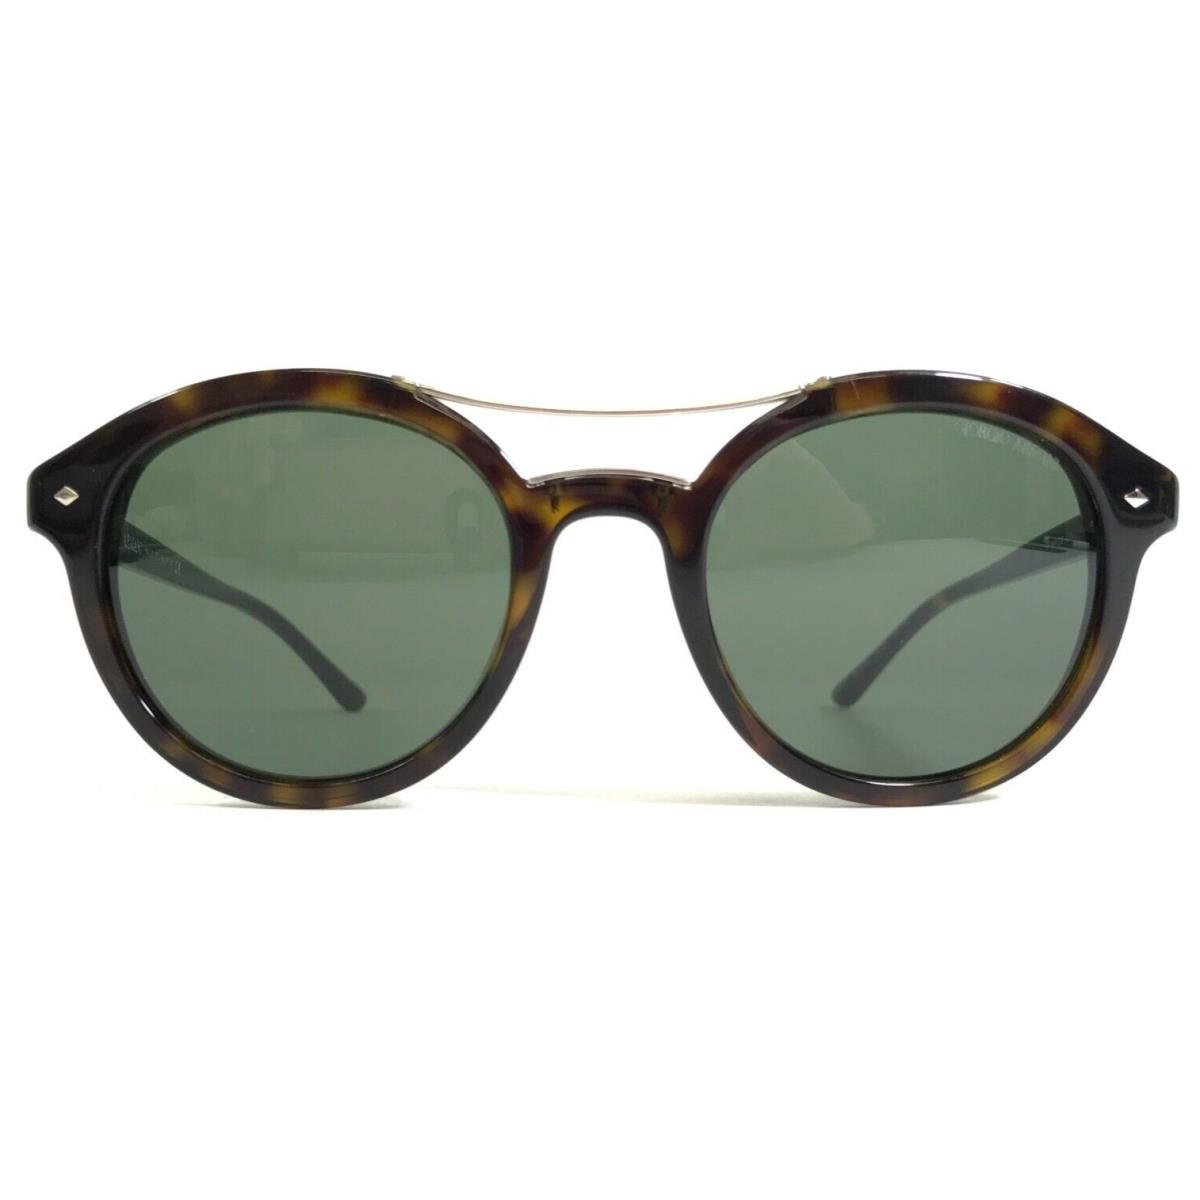 Giorgio Armani AR8007 5026/31 Tortoise Round Sunglasses Frame 48-21-140